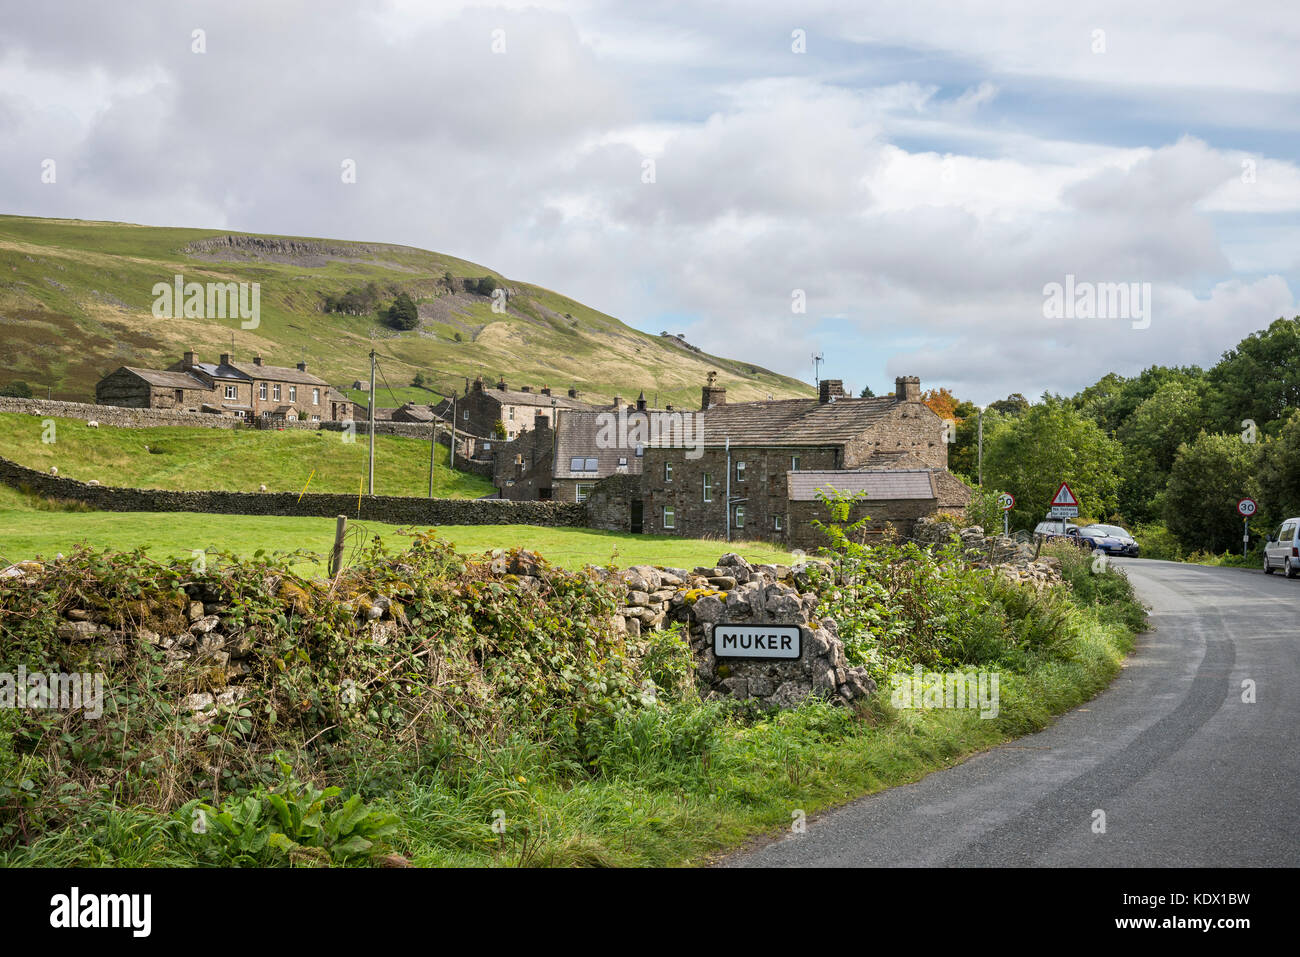 Das Dorf muker in swaledale, Yorkshire Dales, England. Stockfoto